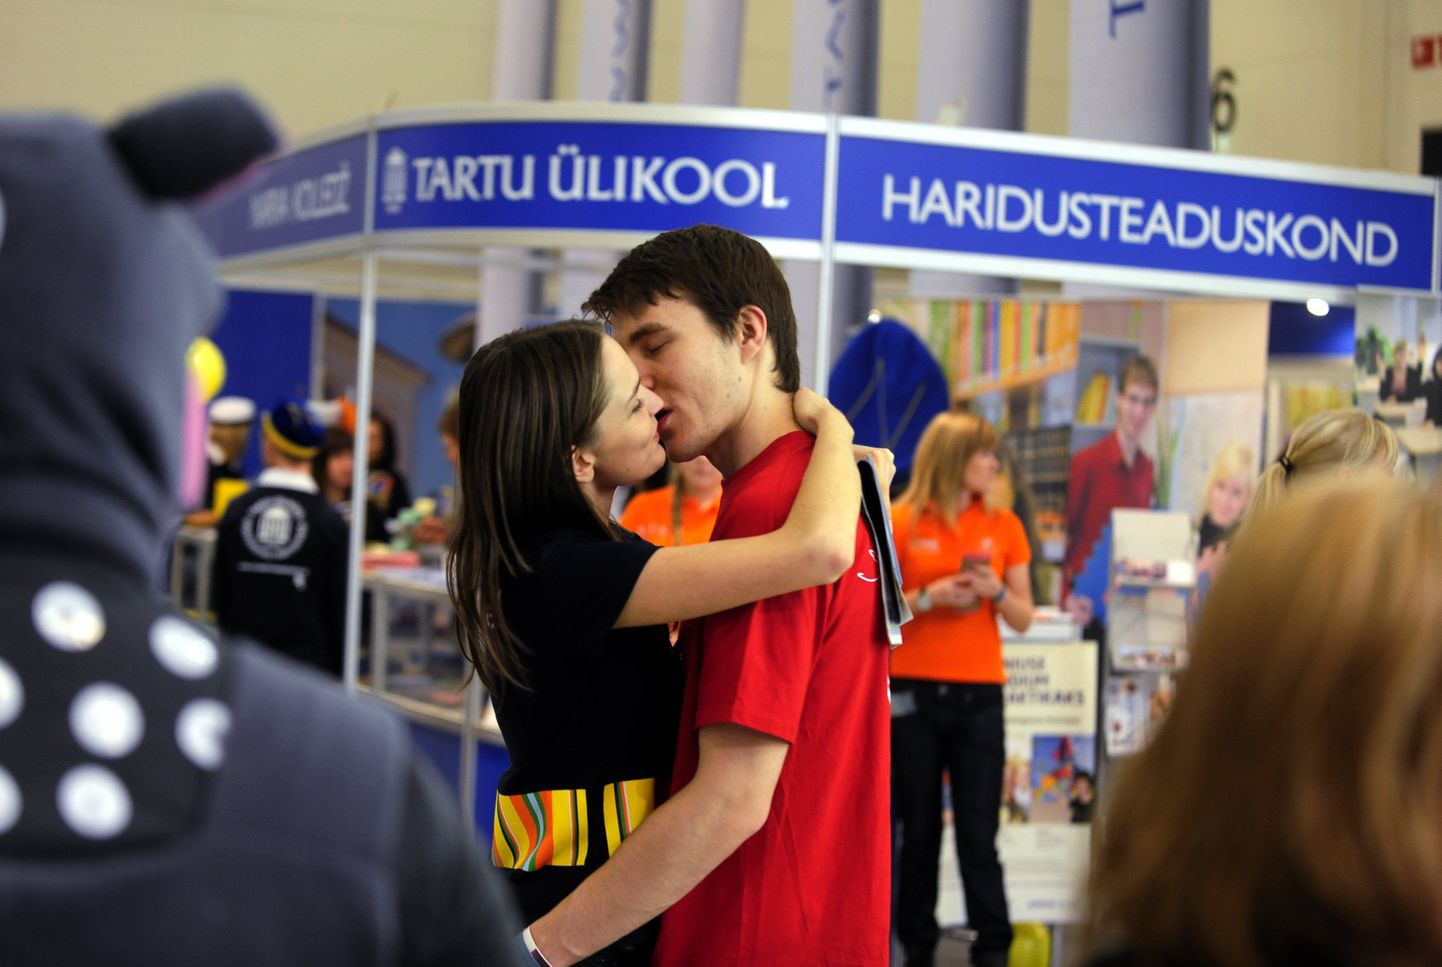 Tallinnas toimub 16. korda noorte infomess "Teeviit".